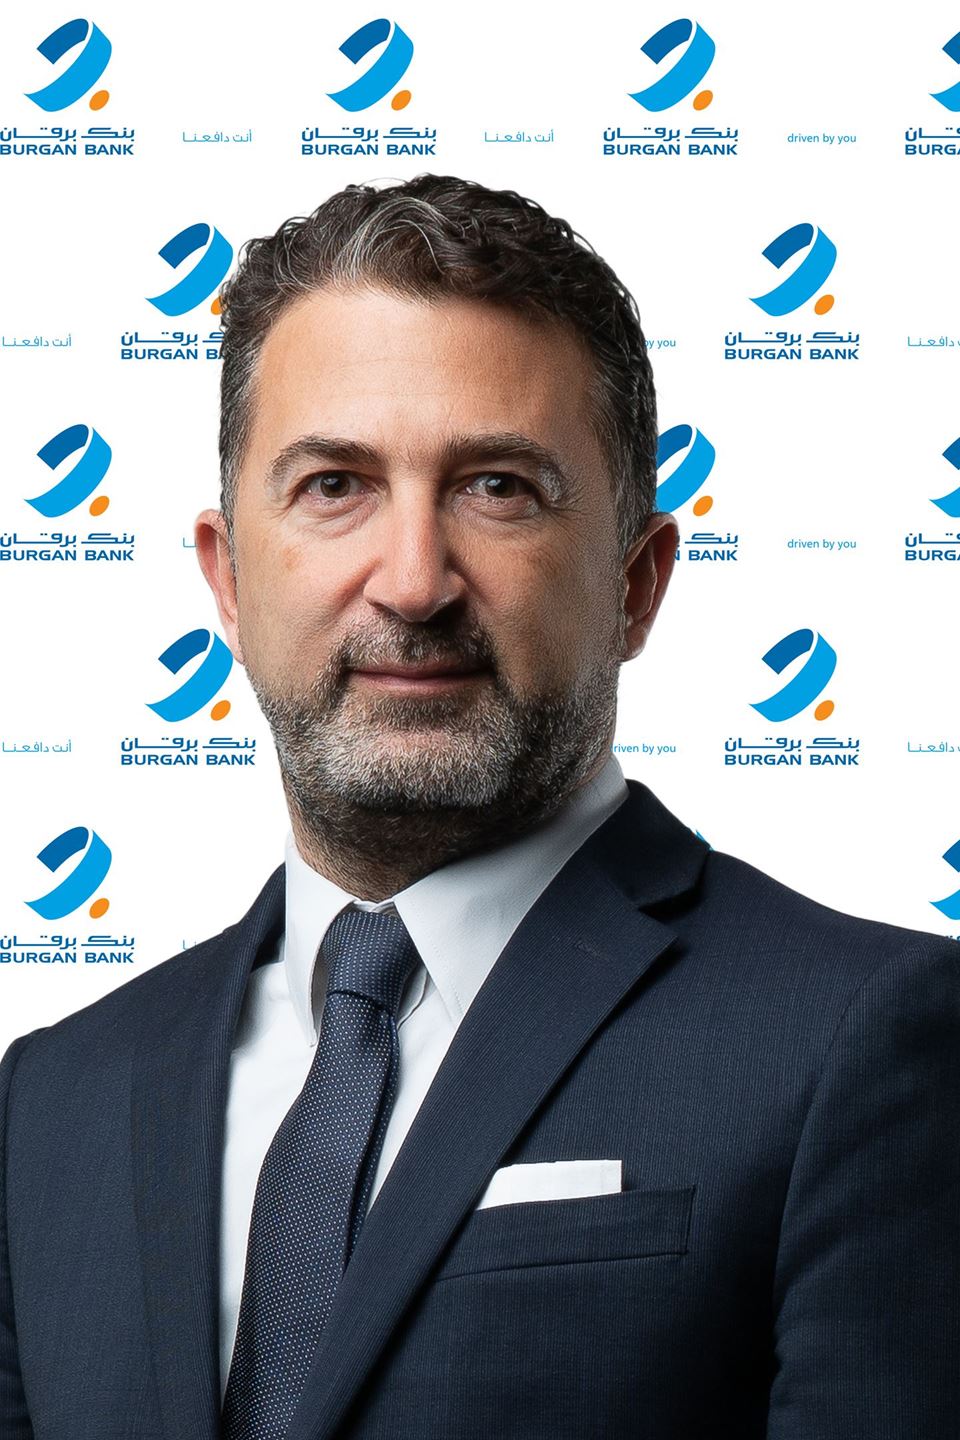 Mr. Deniz Cengiz, Group Chief Digital Banking Officer at Burgan Bank